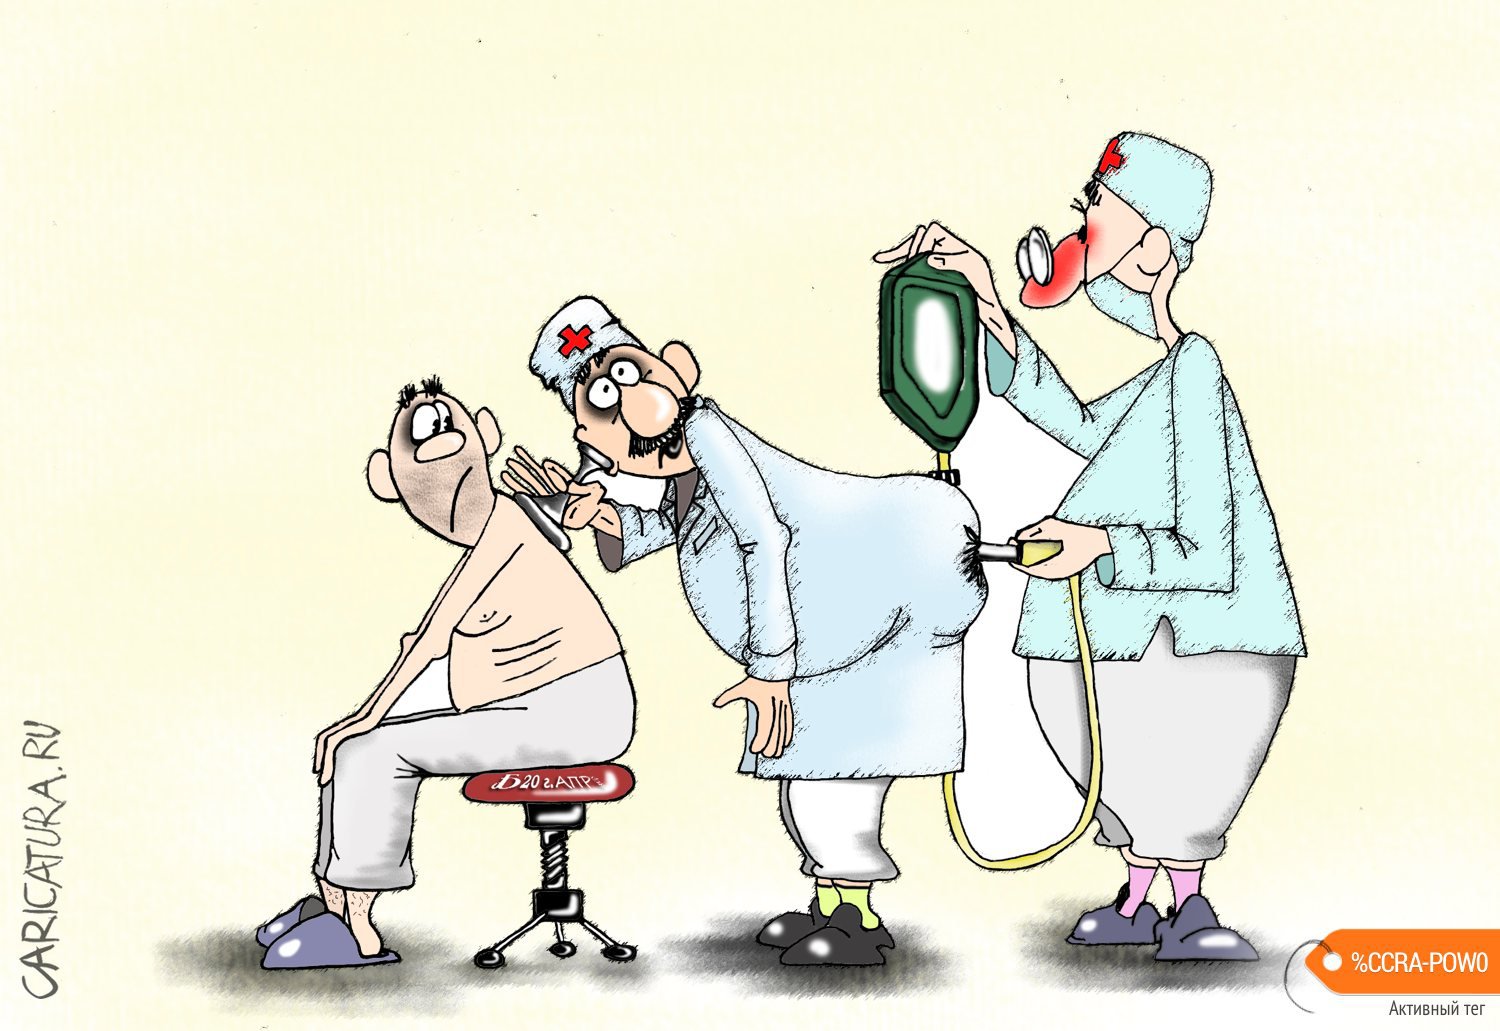 Карикатура "Про здравоохранение", Борис Демин